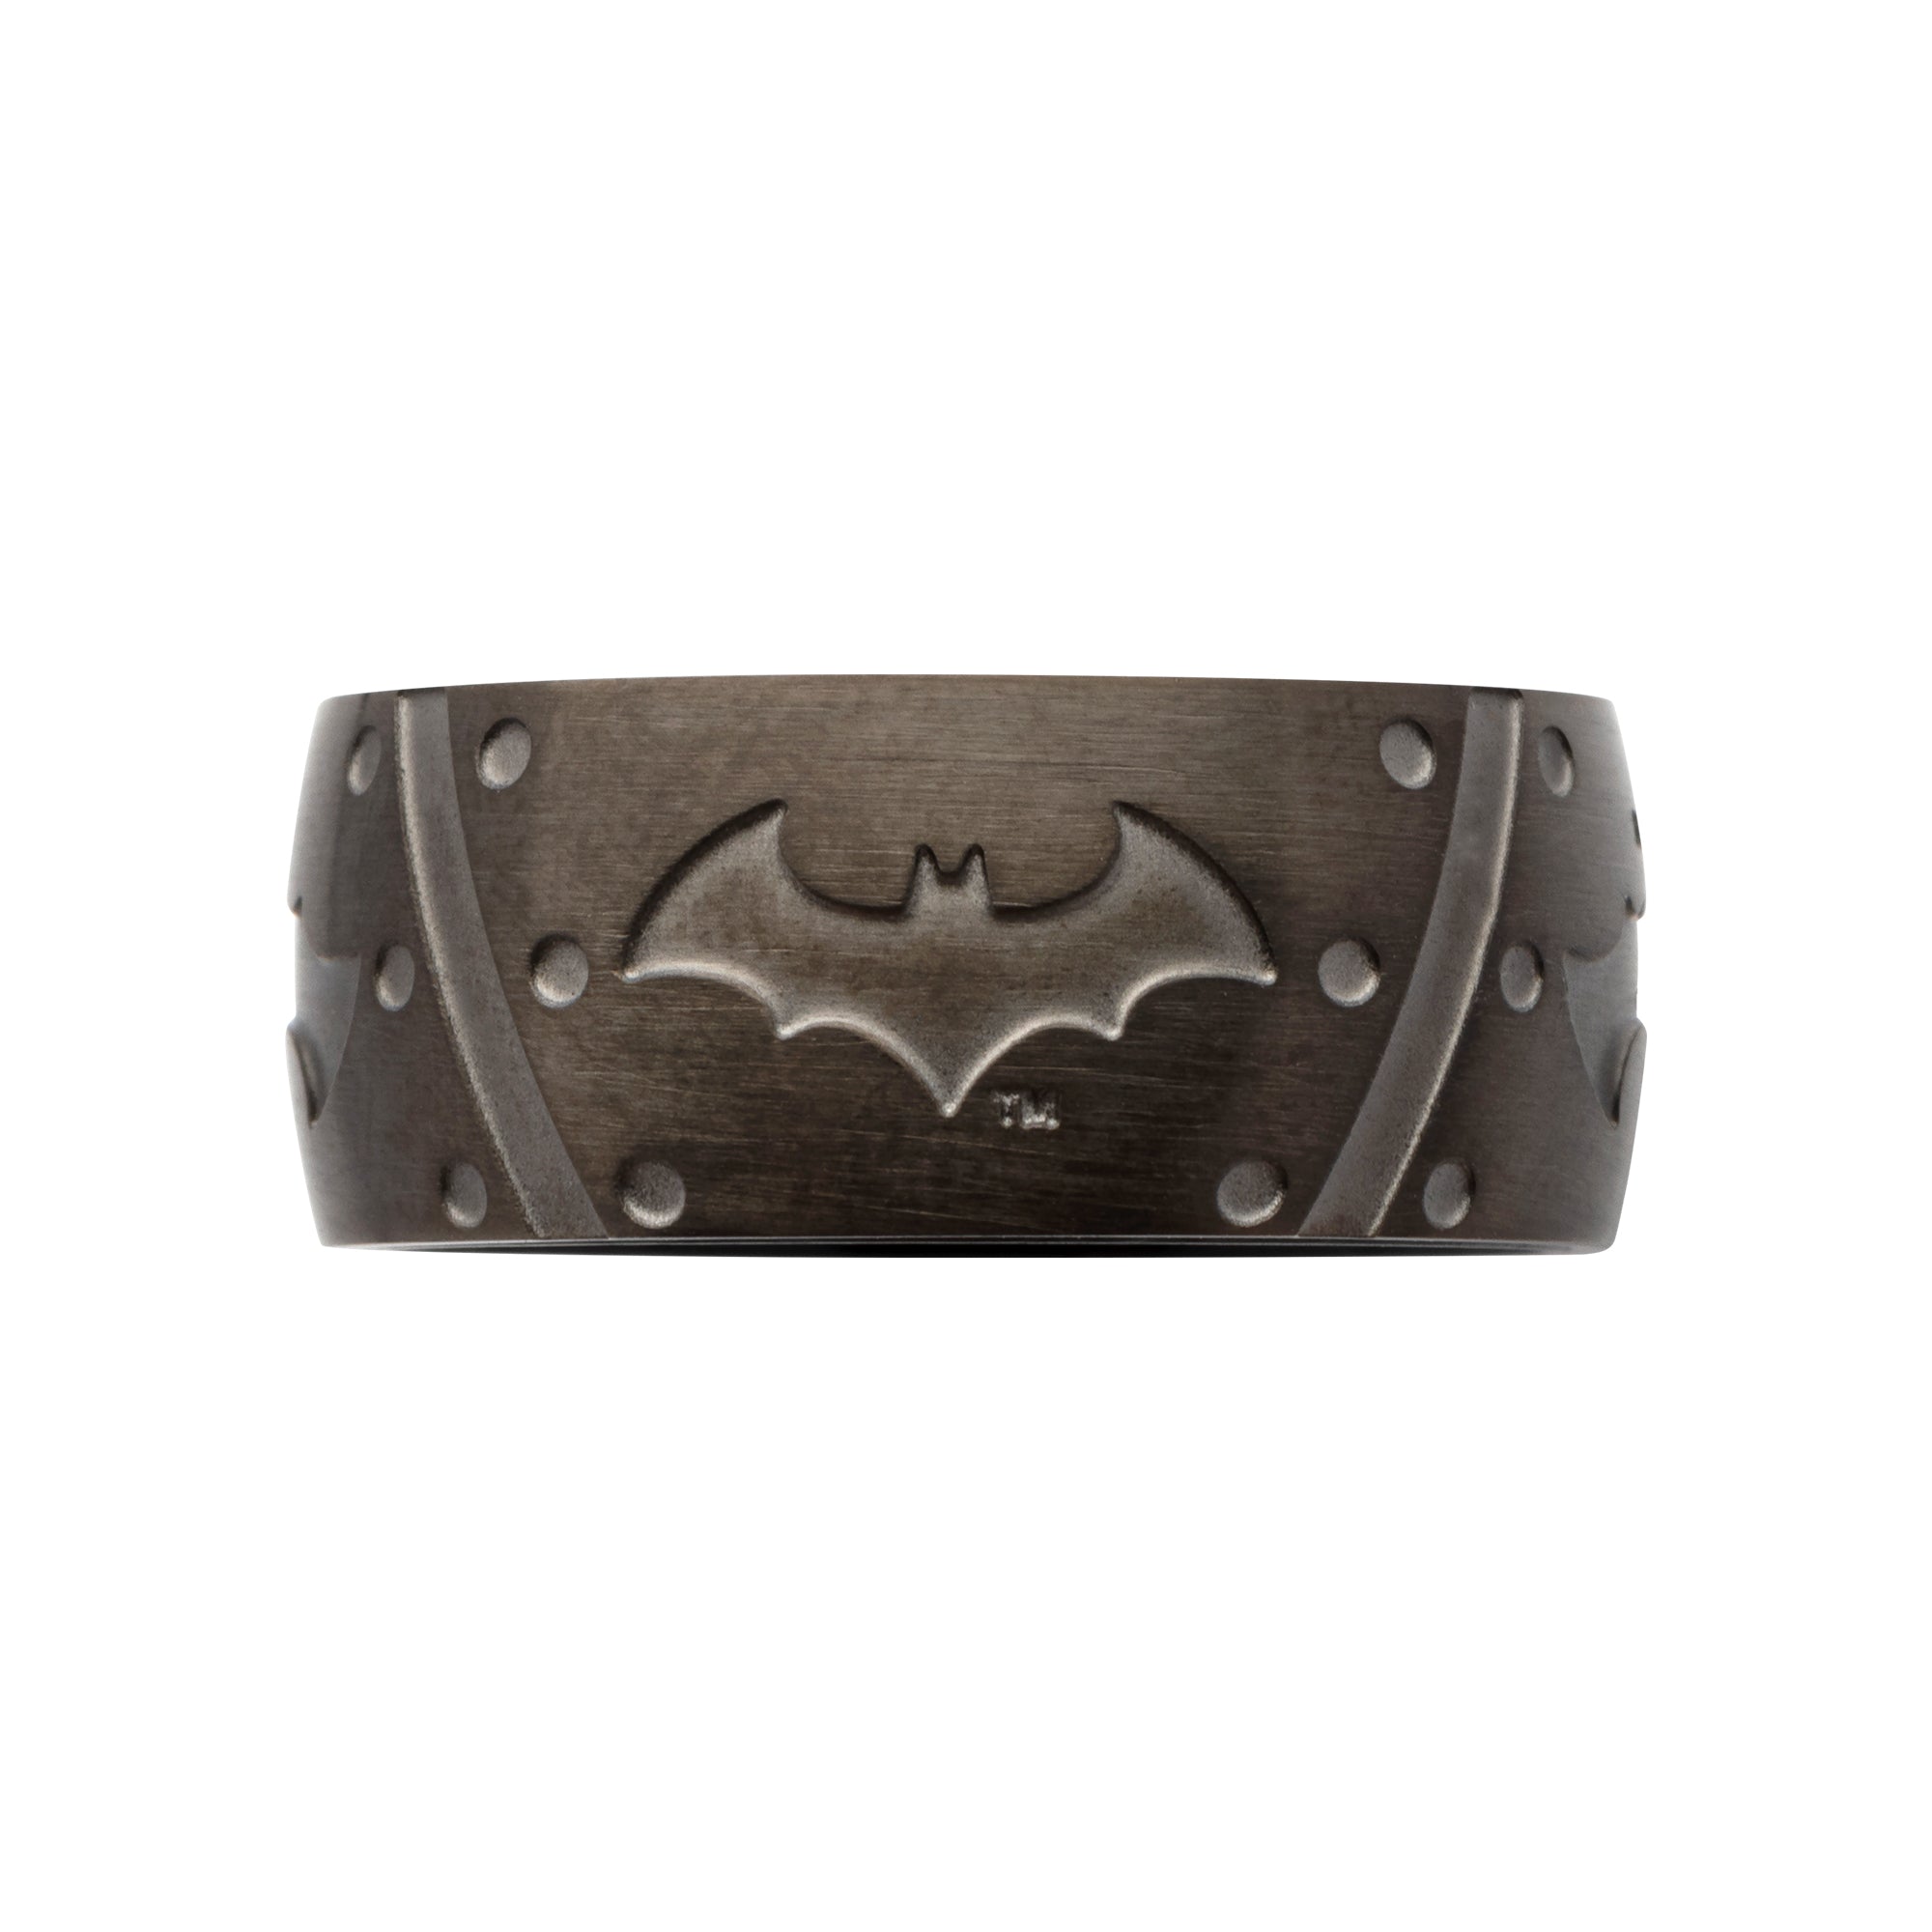 DC Comics Batman Batarang Ring